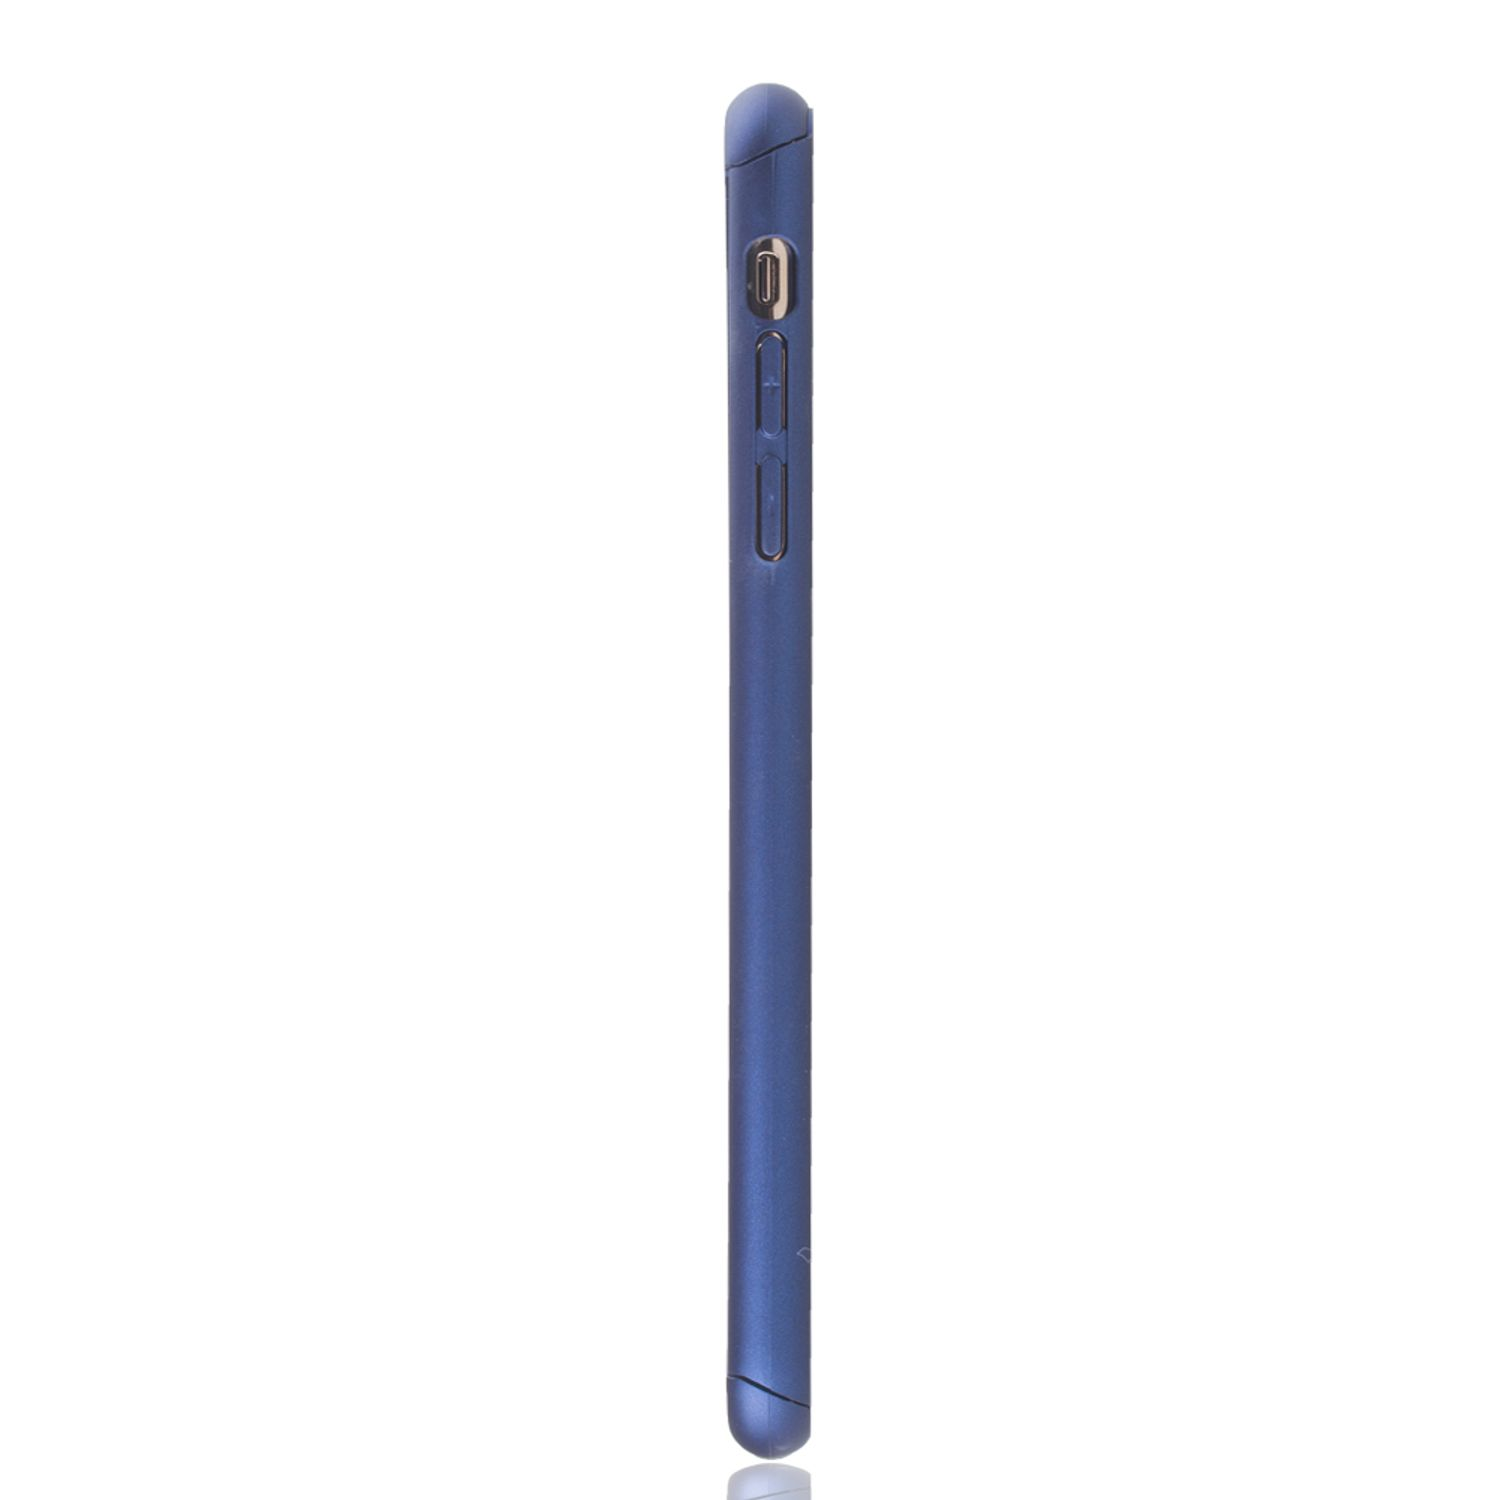 Apple, Schutzhülle, KÖNIG Cover, Max, iPhone XS Full DESIGN Blau